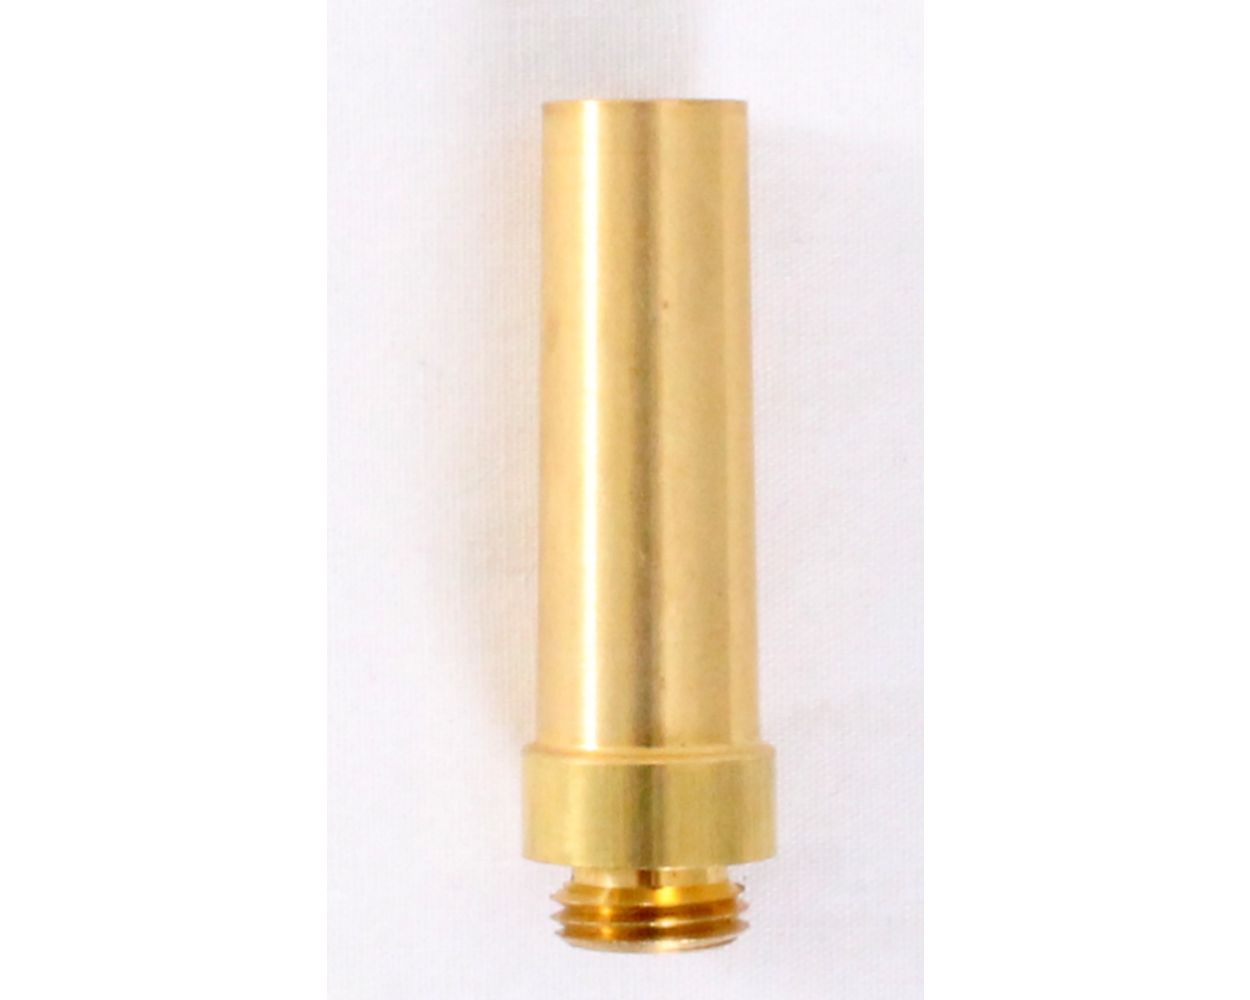 Black Powder Brass Flask- springed release valve- 35 grain spout